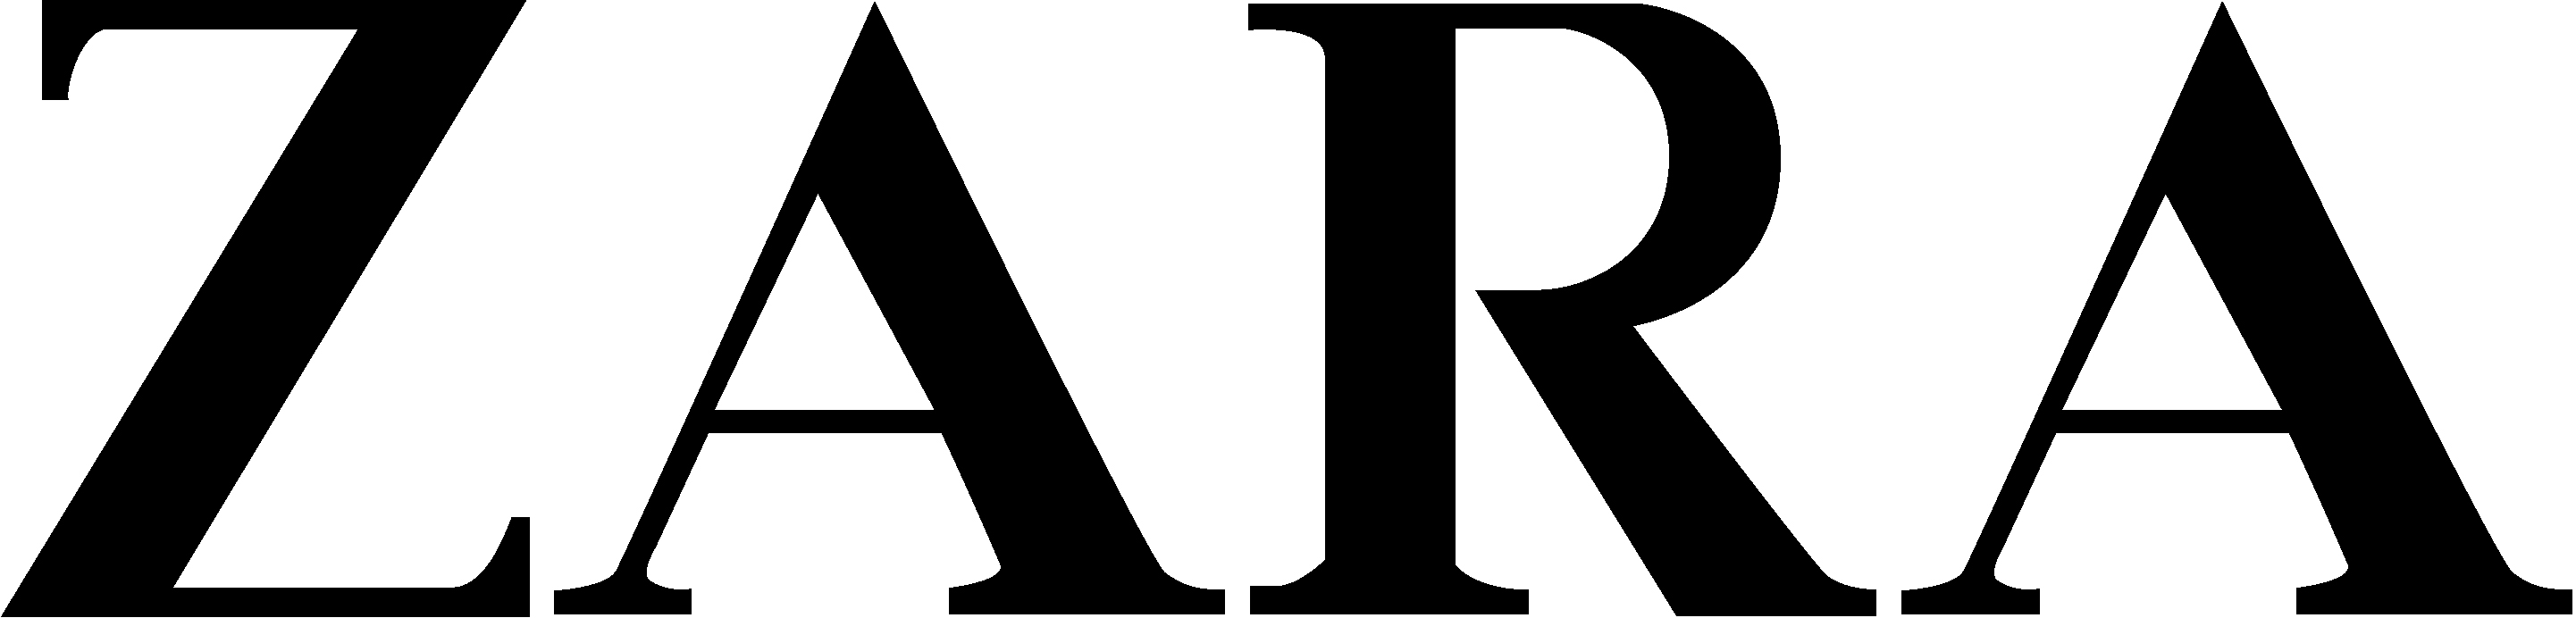 http://www.ranklogos.com/wp-content/uploads/2015/06/Zara-Logo.jpg